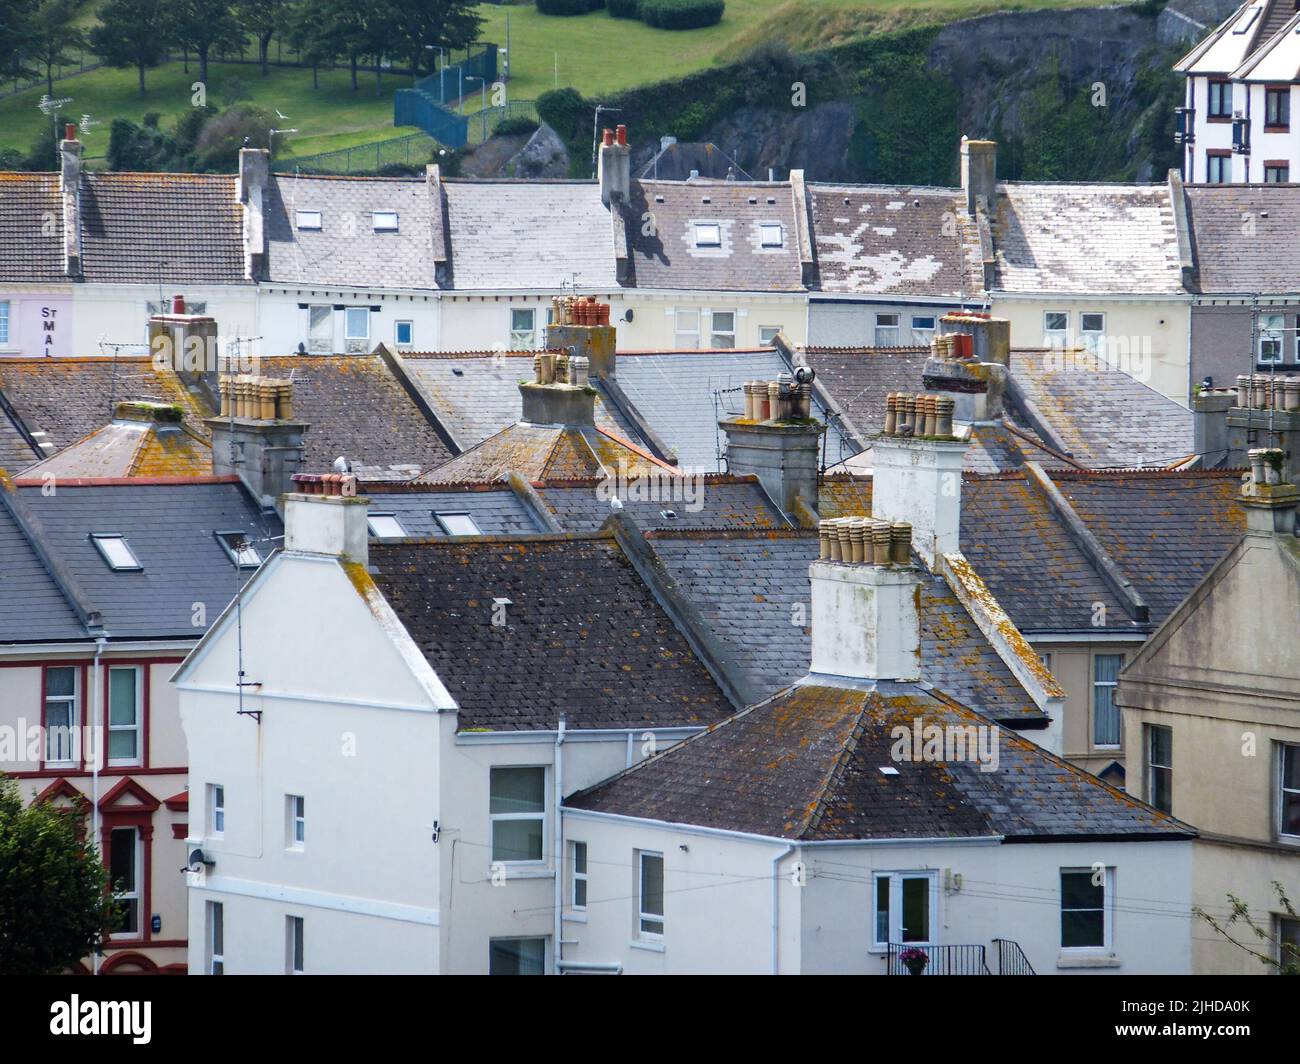 Looking across the rooftops of a neighborhood in Plymouth, Devon, England, UK. Stock Photo